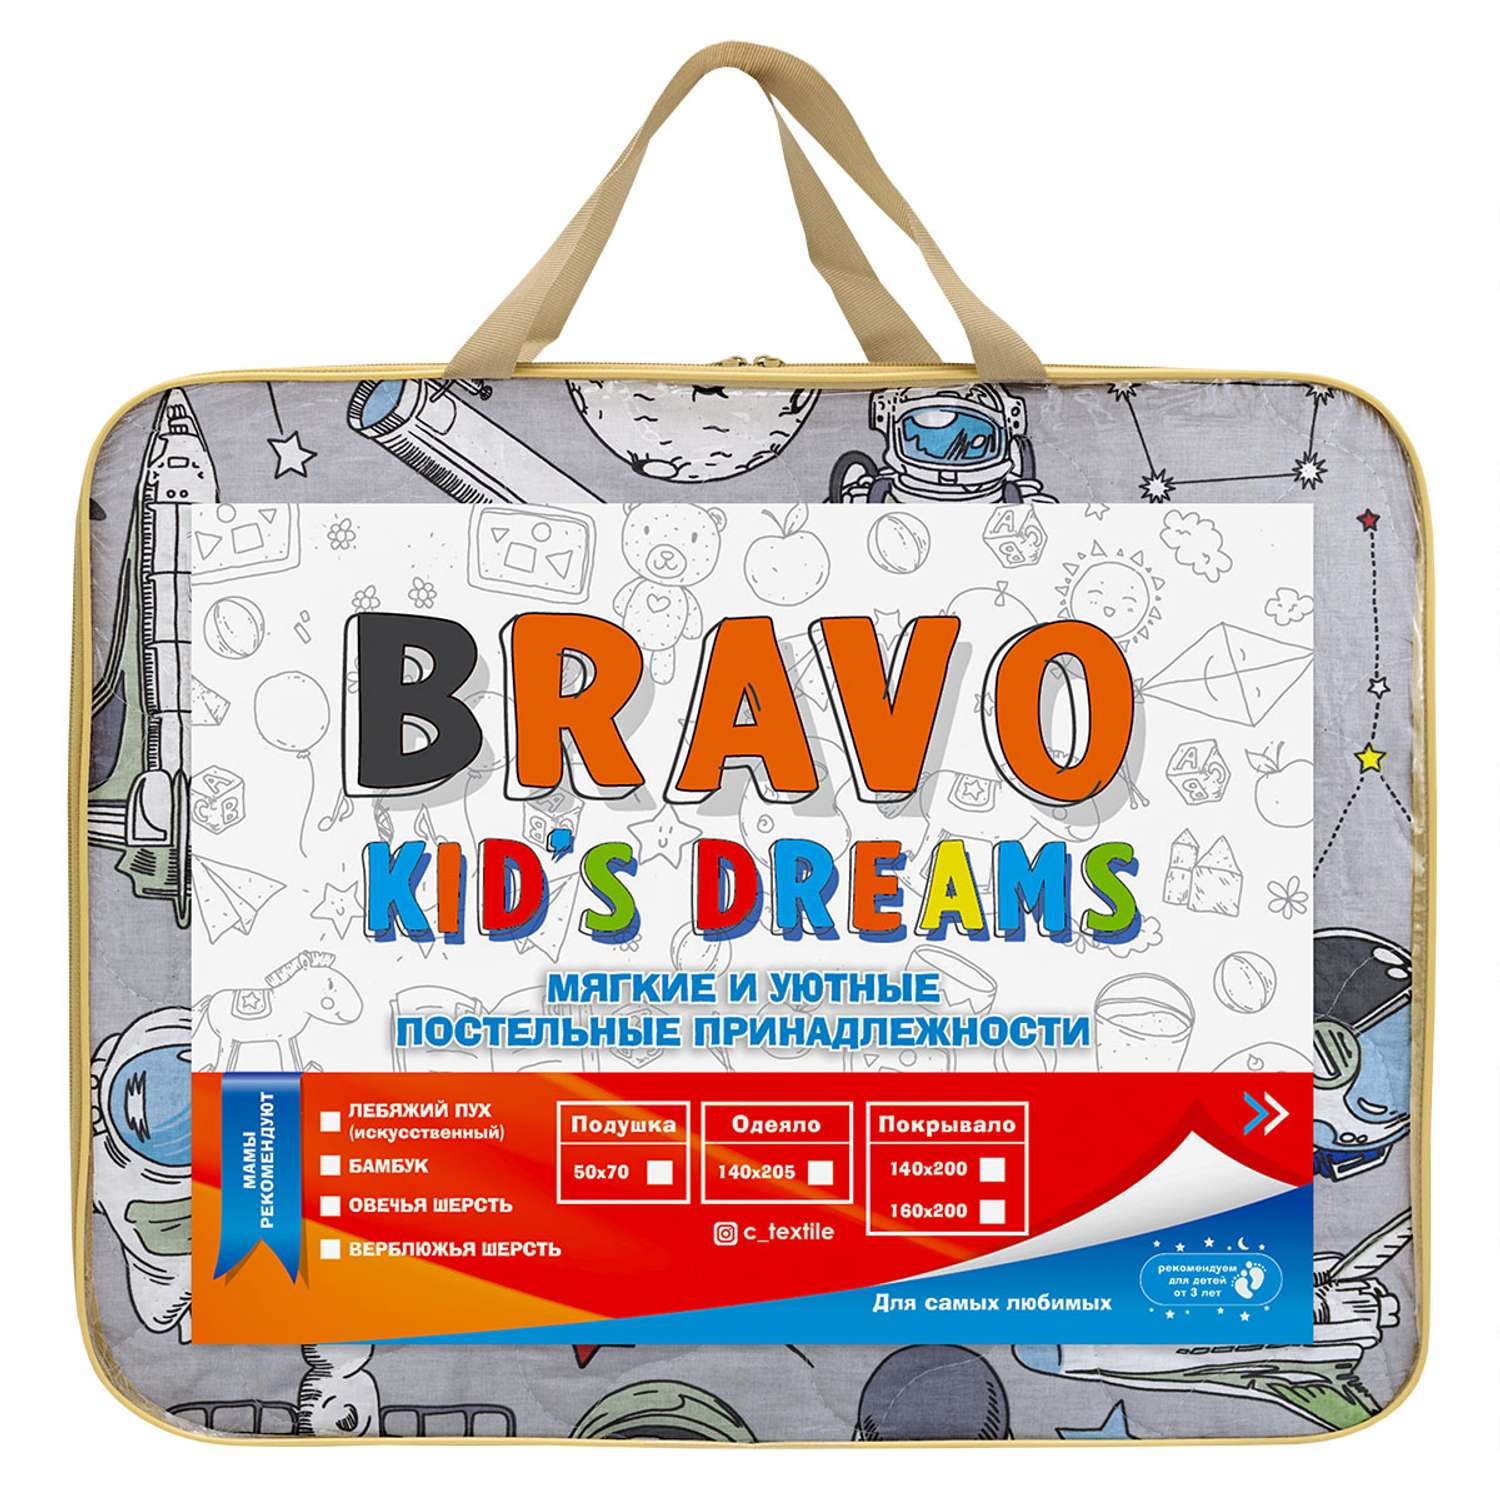 Покрывало BRAVO kids dreams Space 160х200 см - фото 7